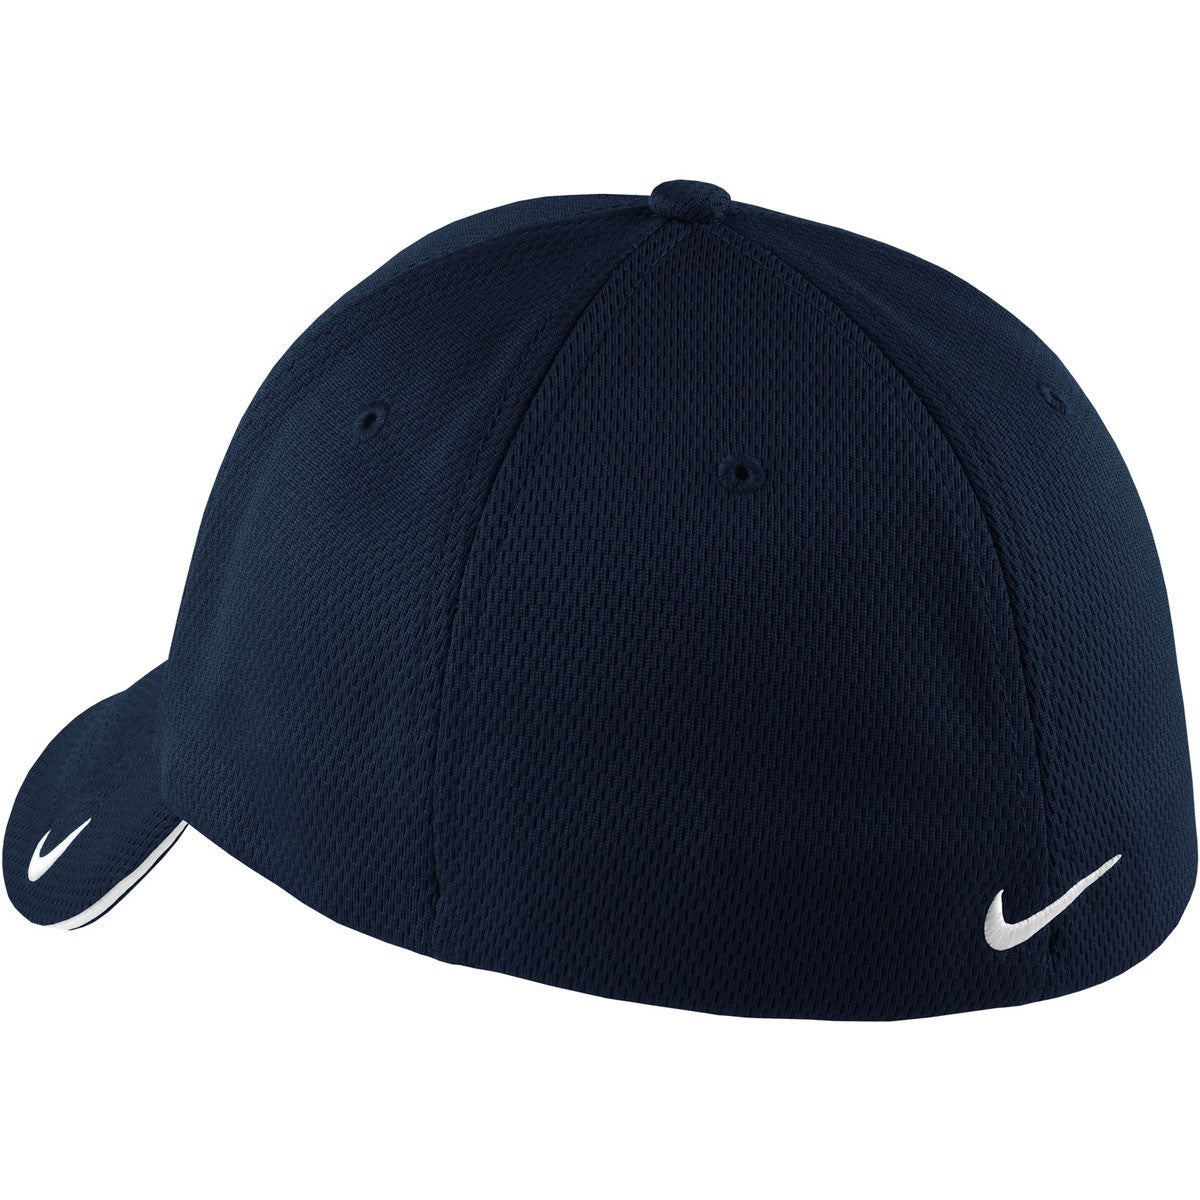 Nike Golf Navy Dri-FIT Mesh Flex Cap